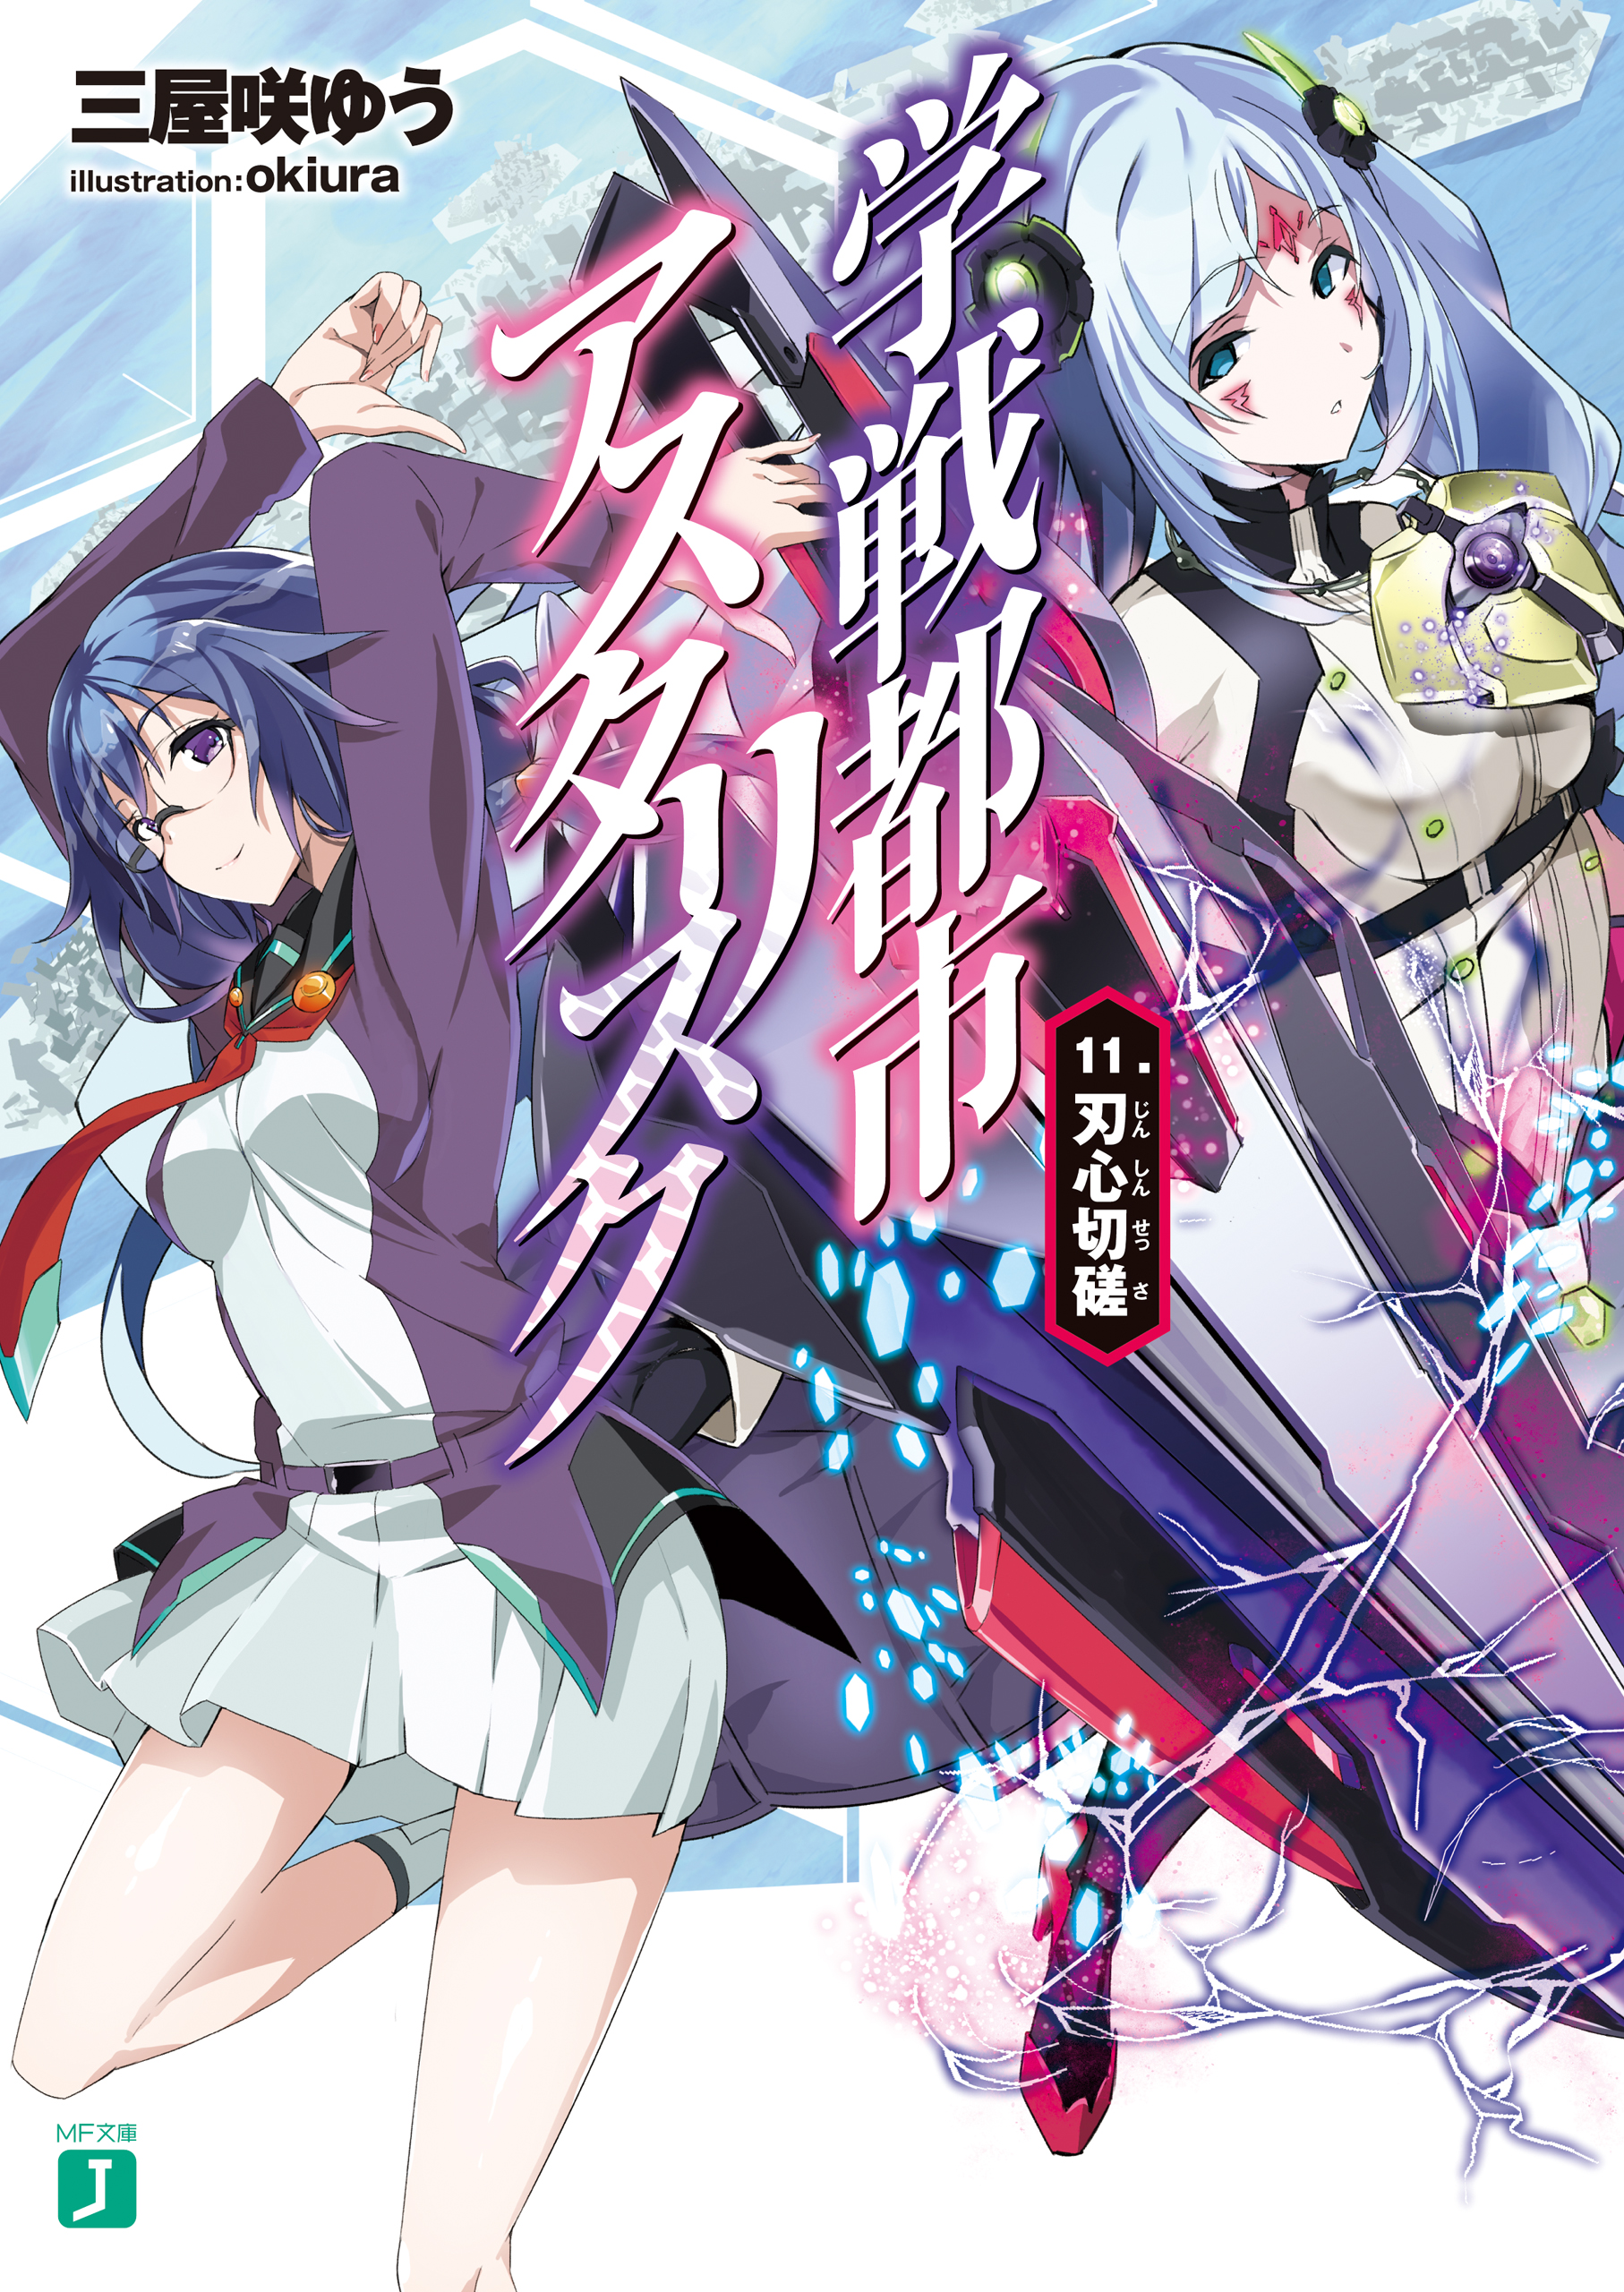 Light Novel] [English] Gakusen Toshi Asterisk